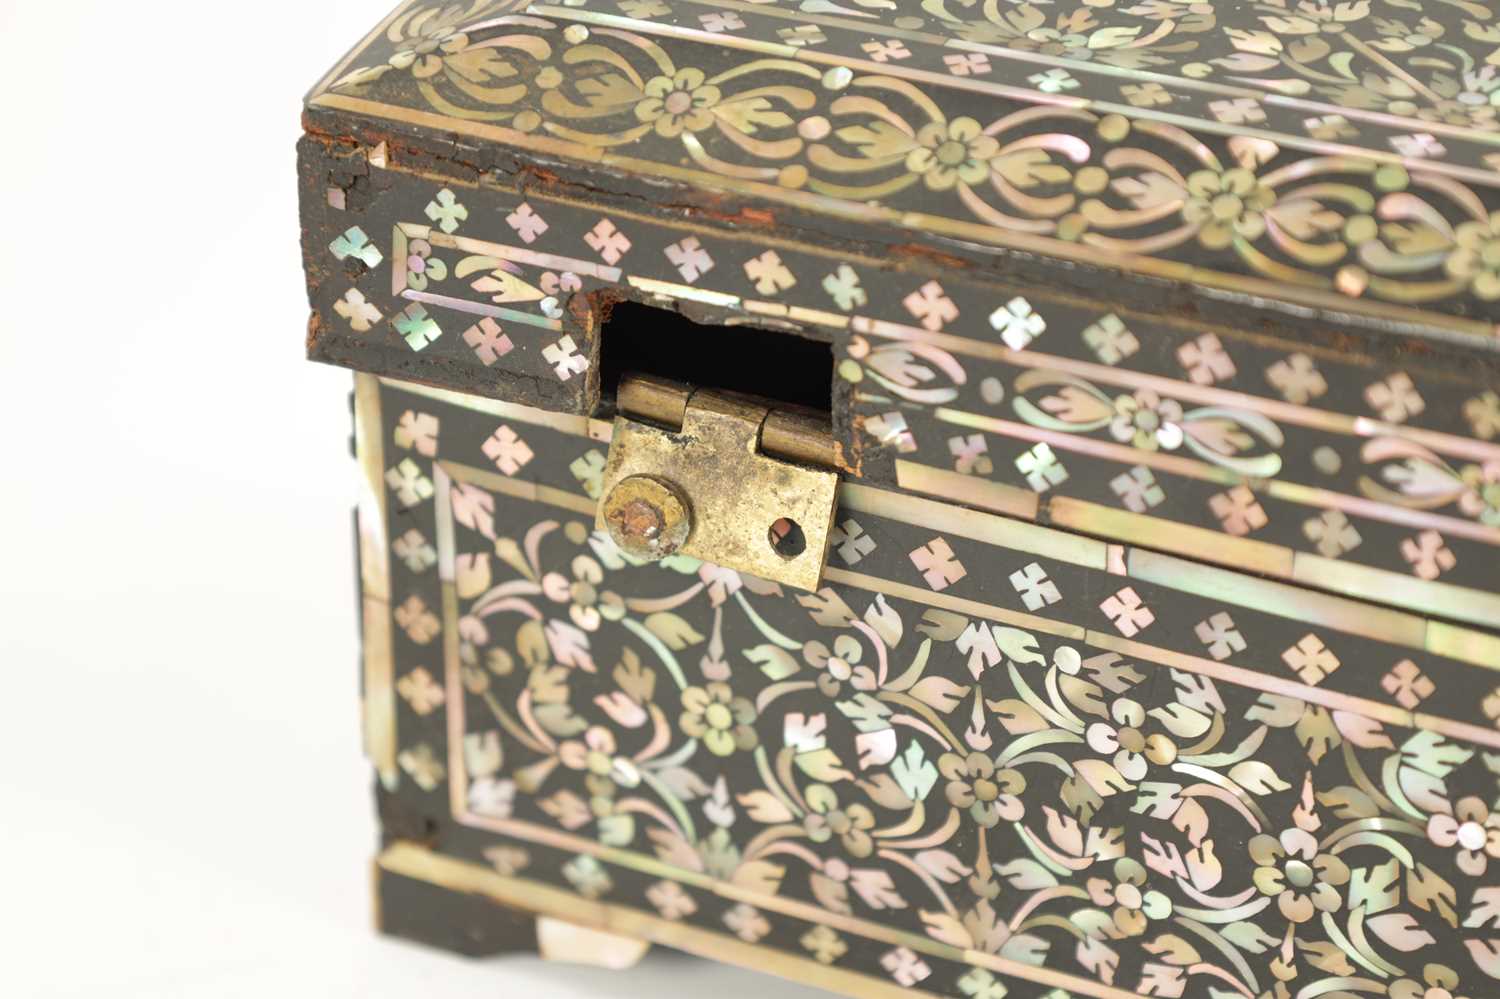 A RARE 17TH/18TH CENTURY INDO PORTUGUESE INLAID CASKET - Image 8 of 13